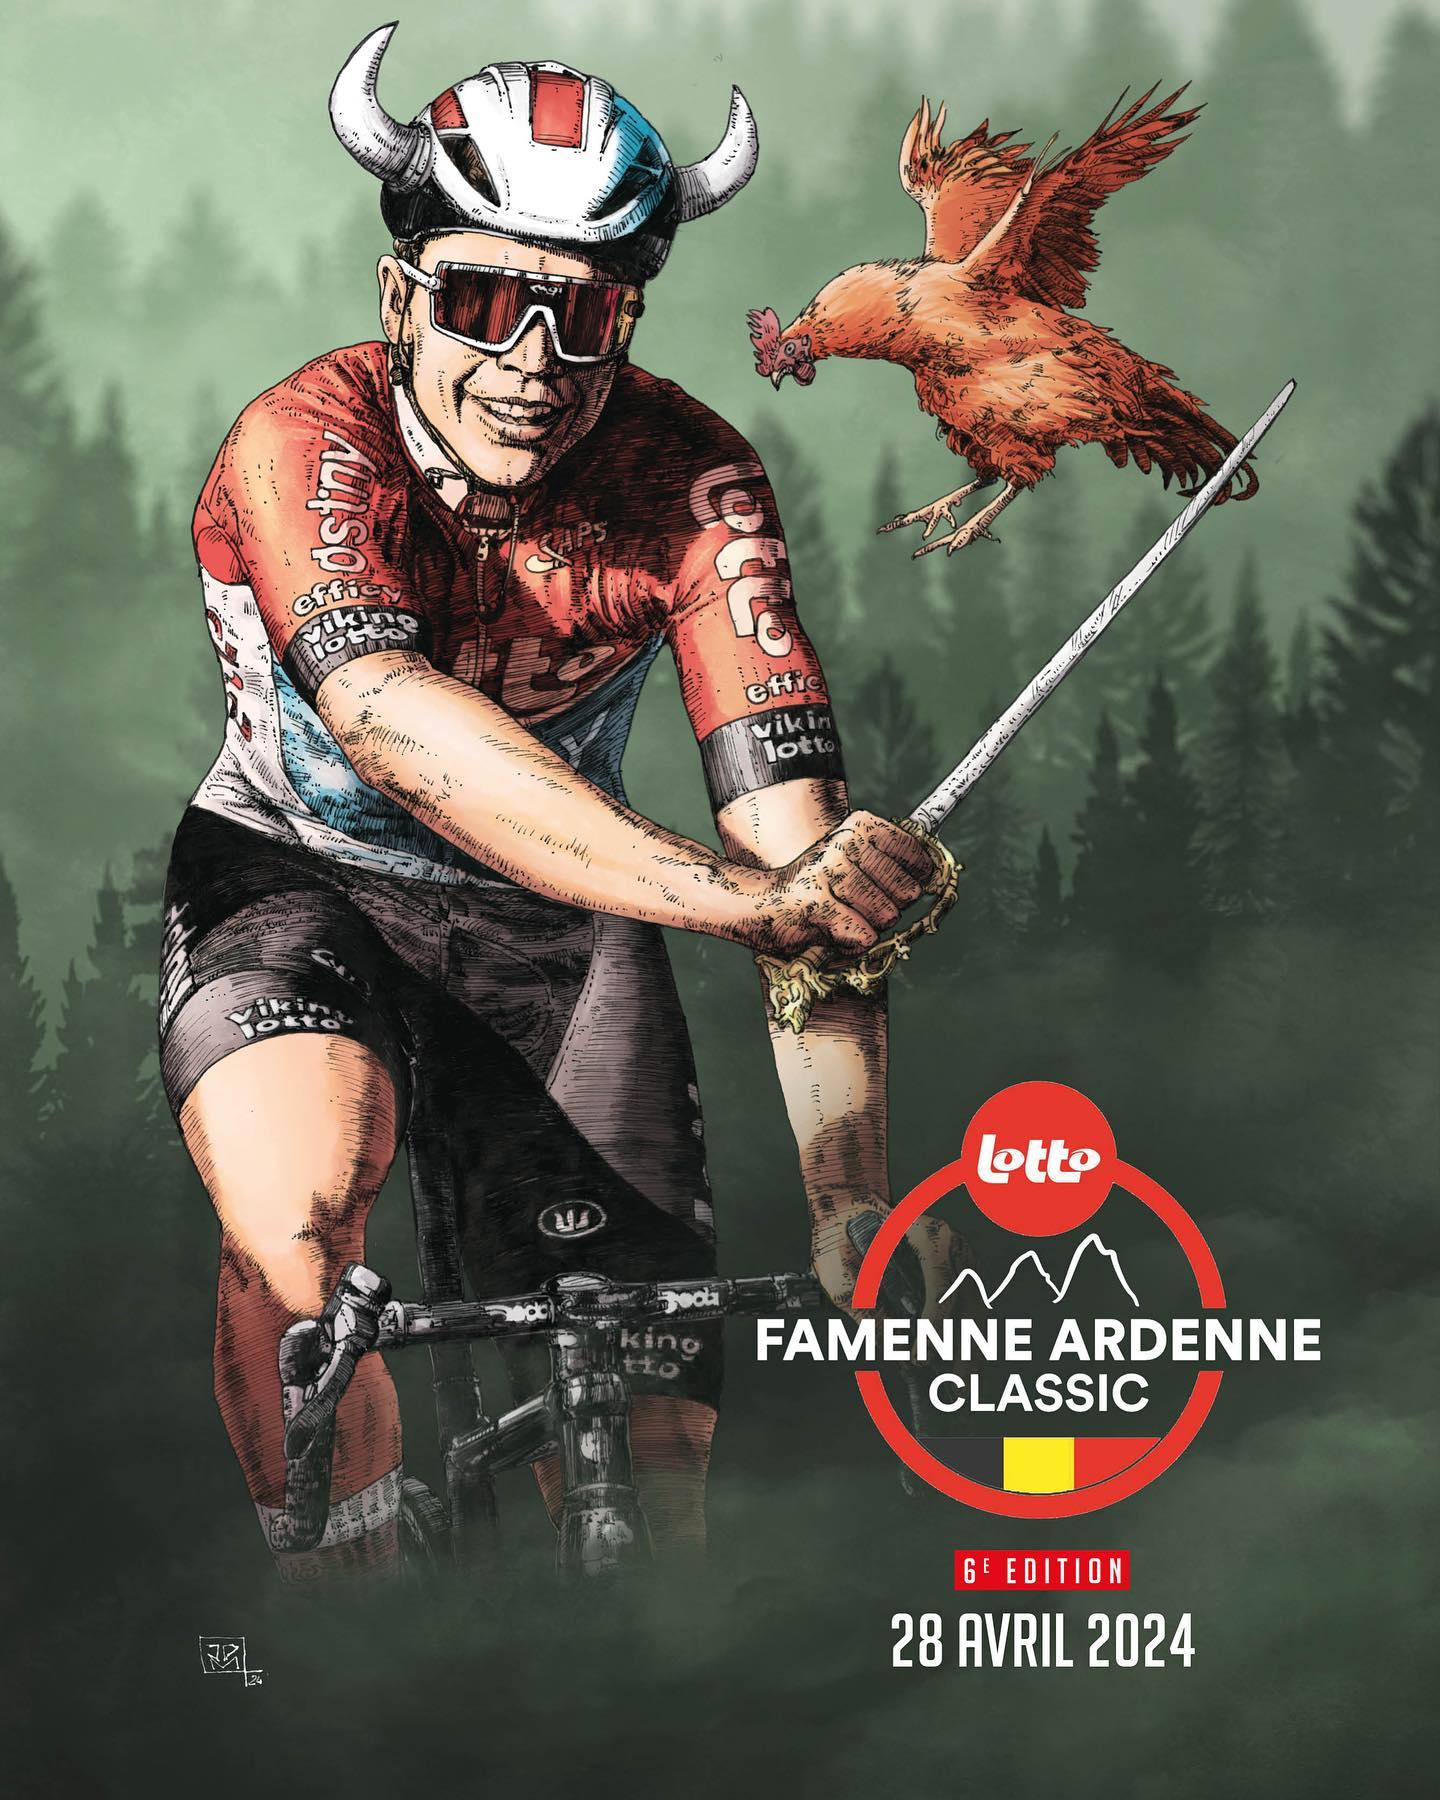 Lotto-Famenne Ardenne Classic